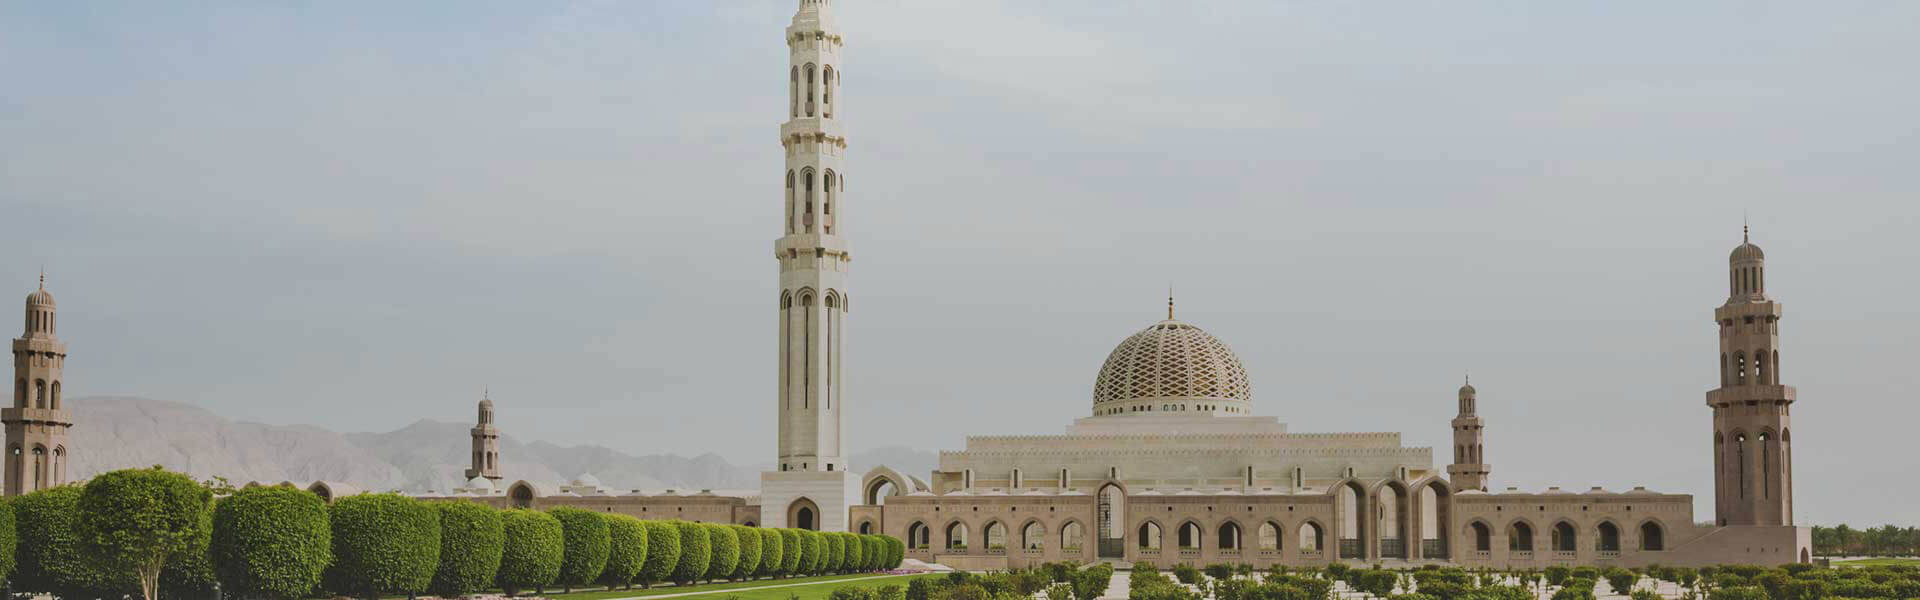 Grand Mosque In Oman Wallpaper